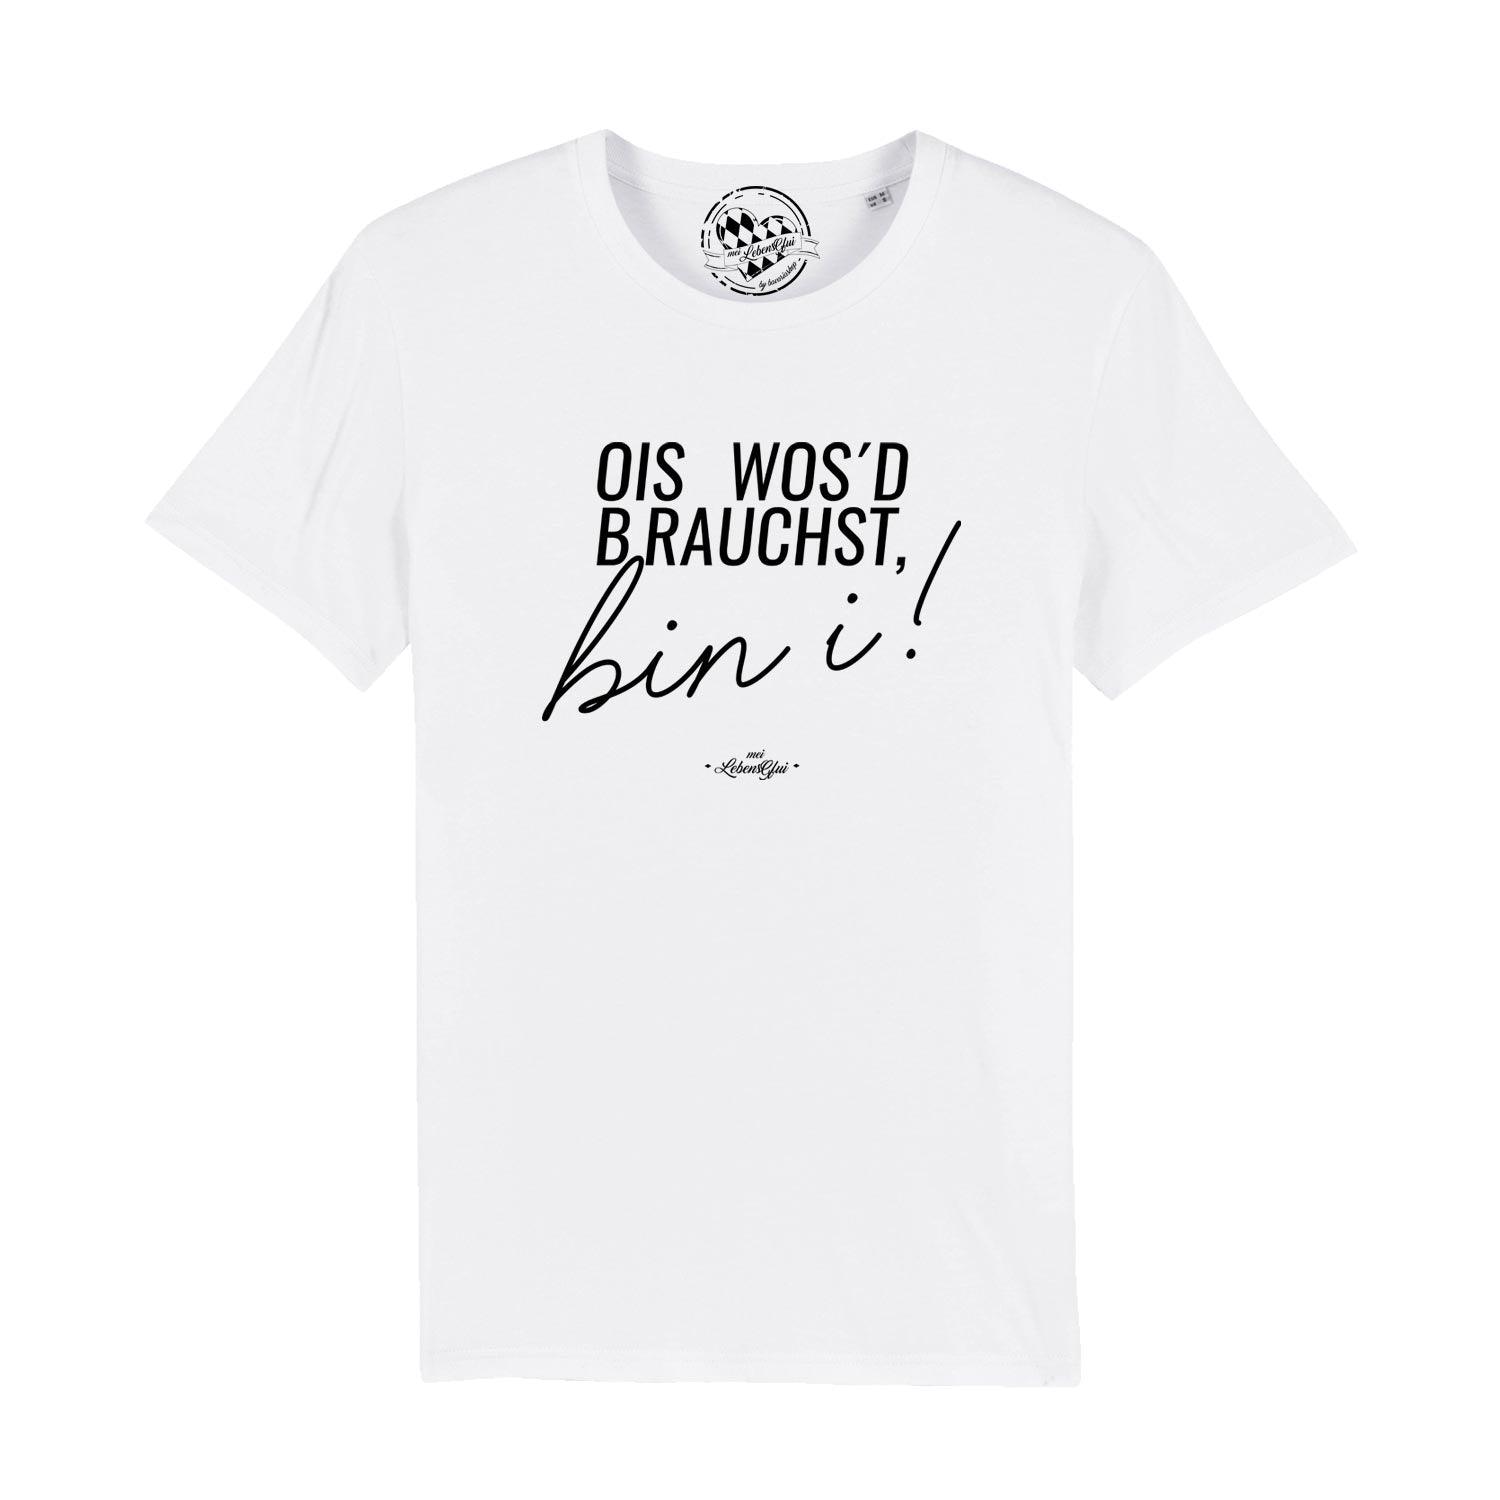 Herren T-Shirt "Ois wos'd brauchst..." - bavariashop - mei LebensGfui